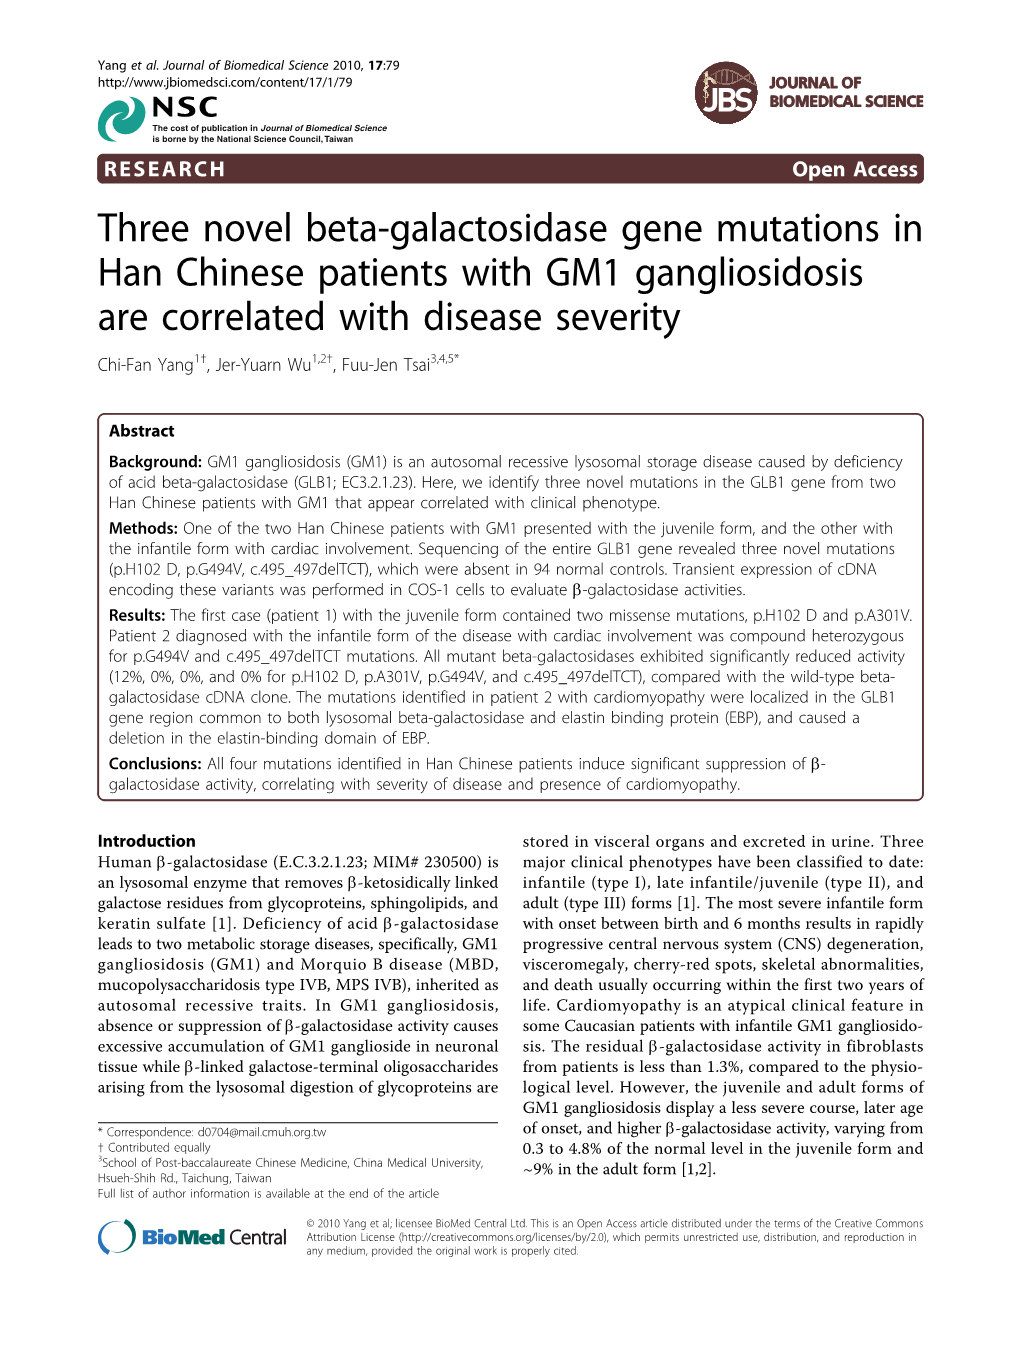 Three Novel Beta-Galactosidase Gene Mutations in Han Chinese Patients